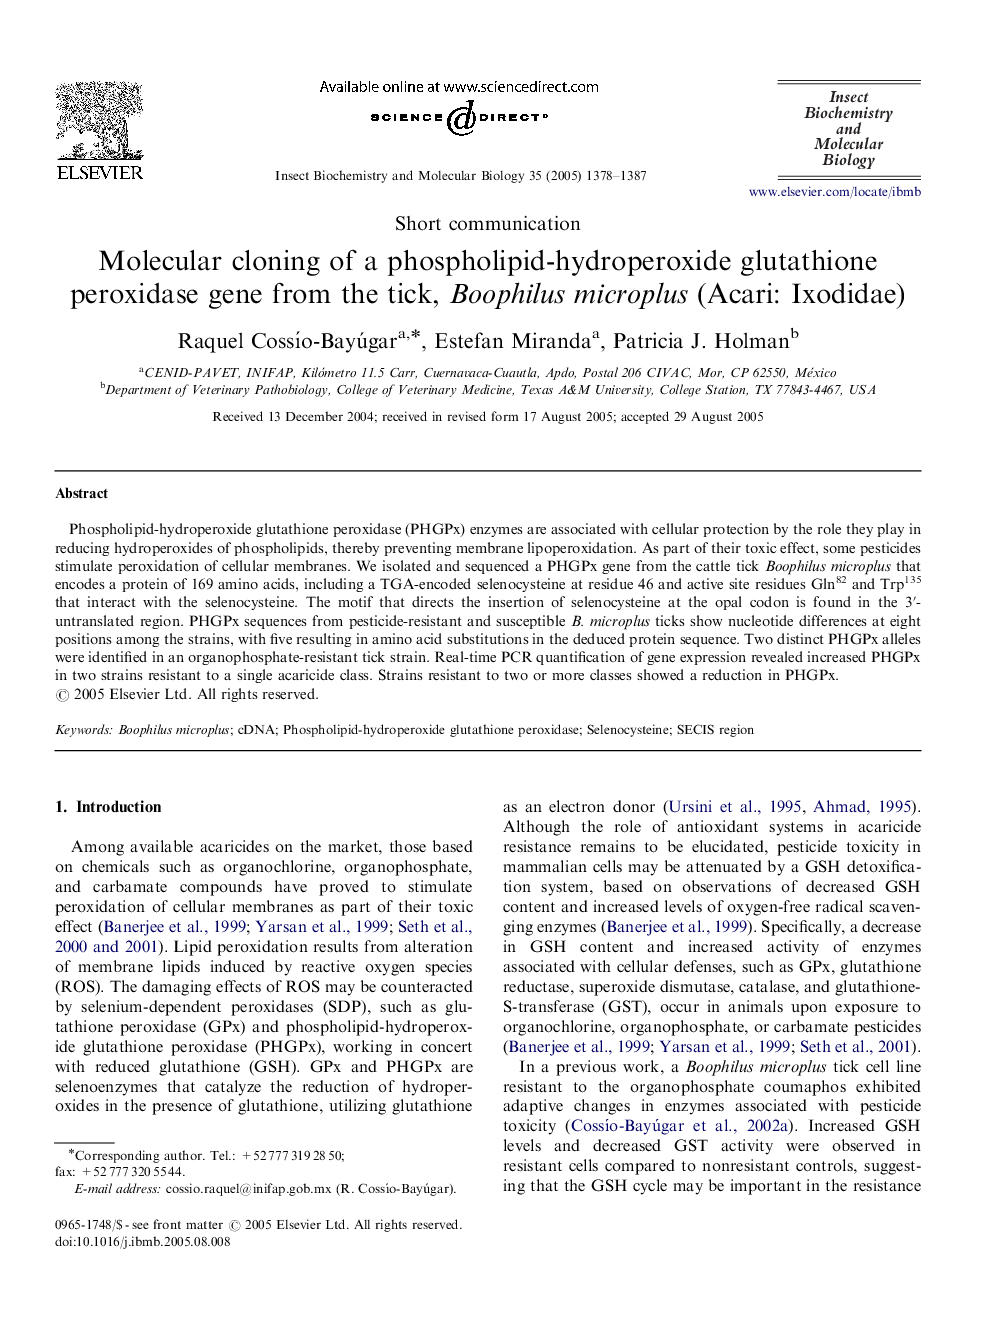 Molecular cloning of a phospholipid-hydroperoxide glutathione peroxidase gene from the tick, Boophilus microplus (Acari: Ixodidae)